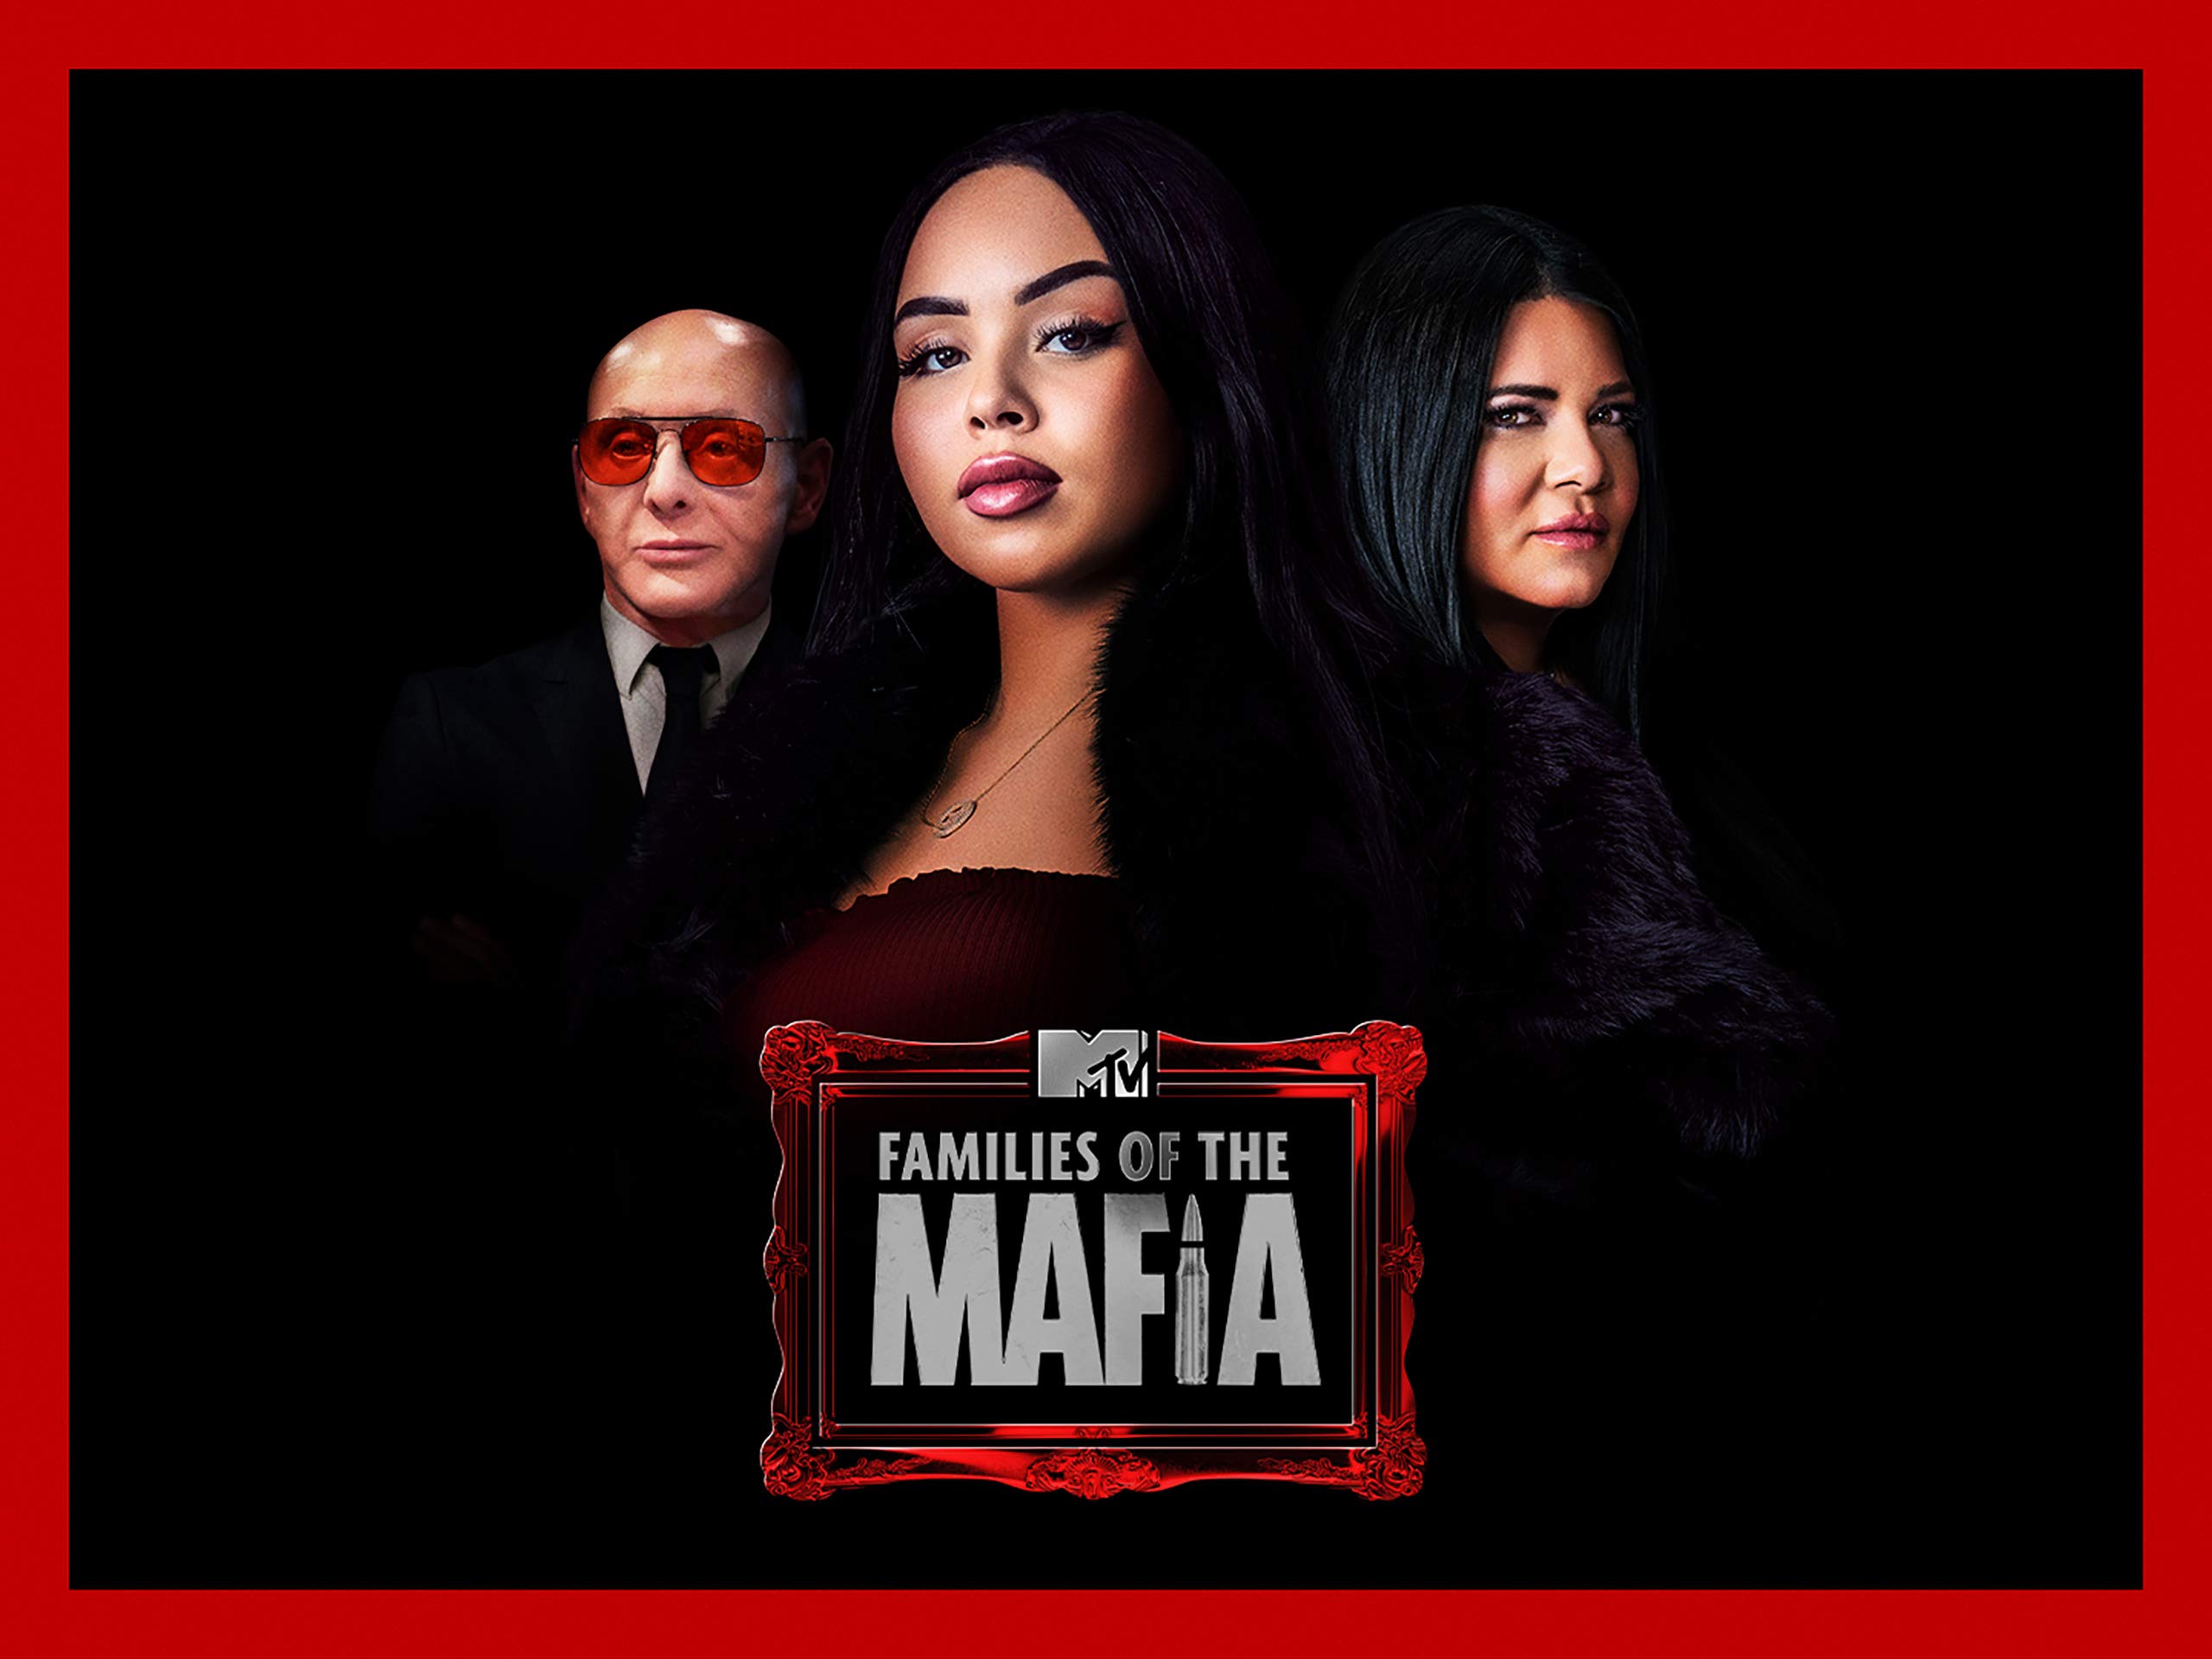 Black Mafia Family Wallpapers